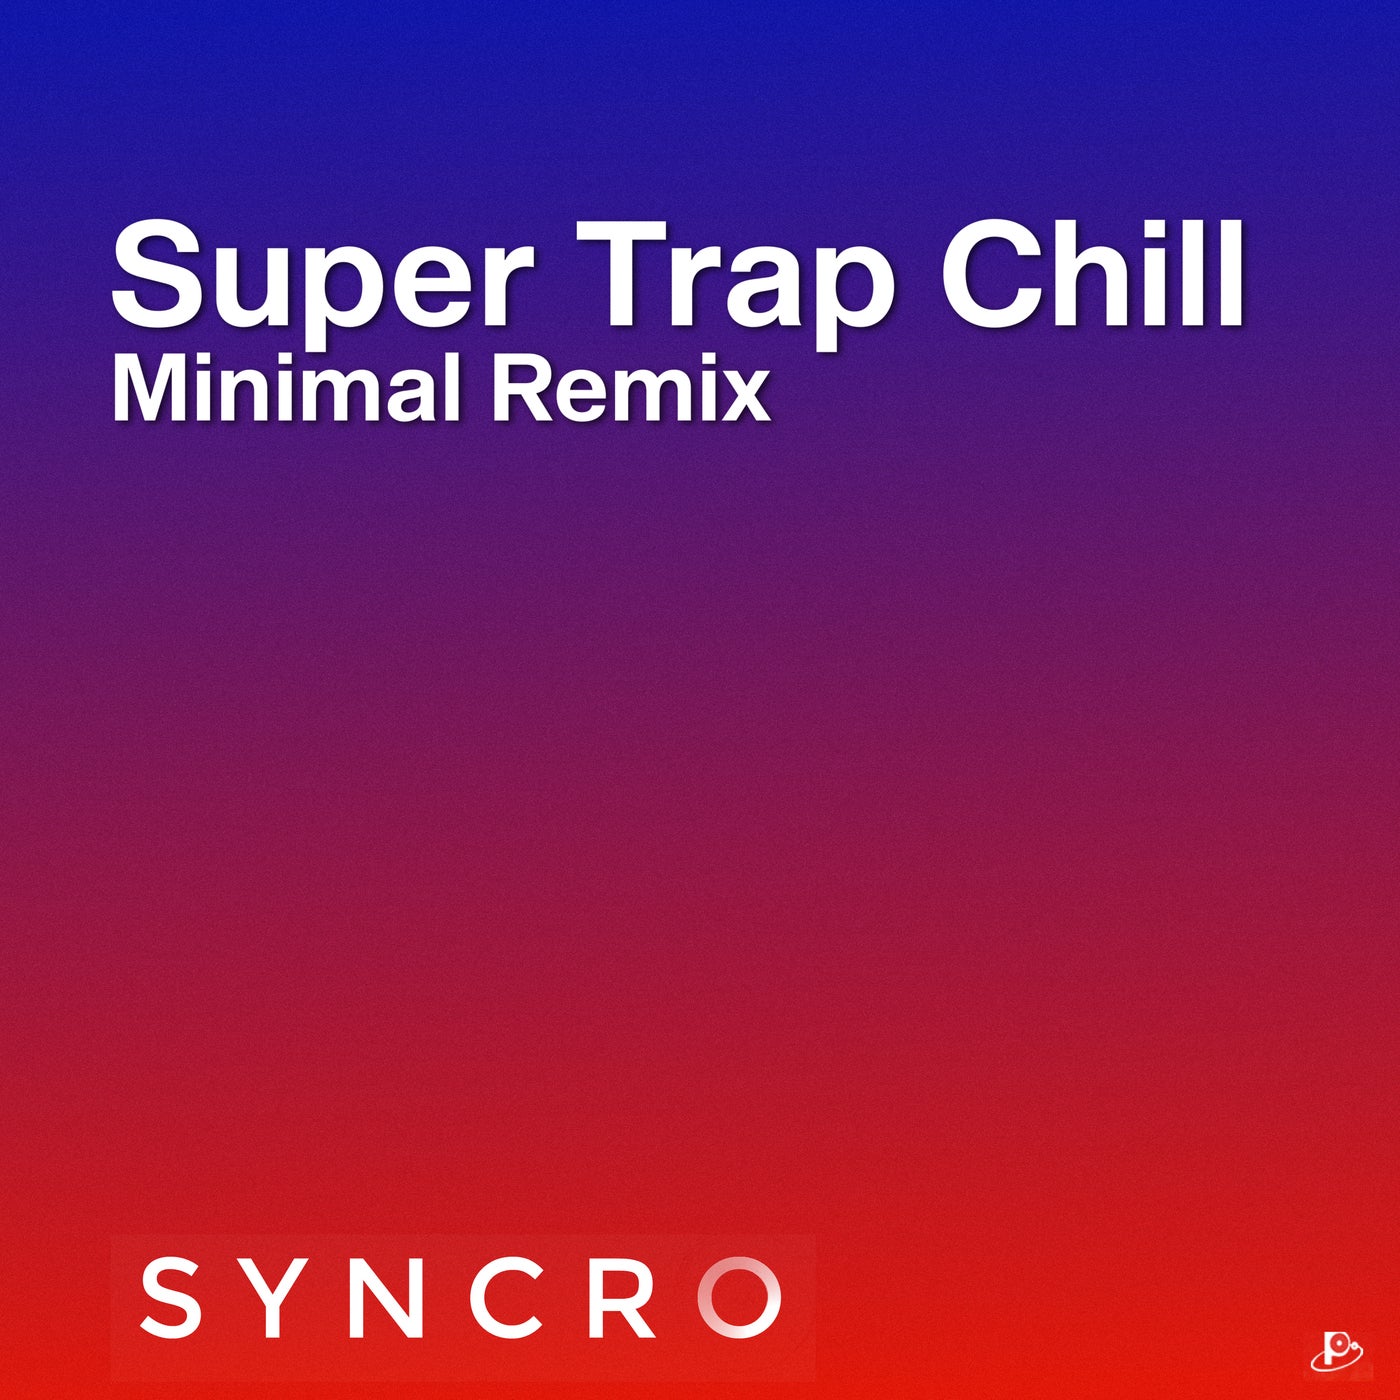 Super Trap Chill (Minimal Remix)